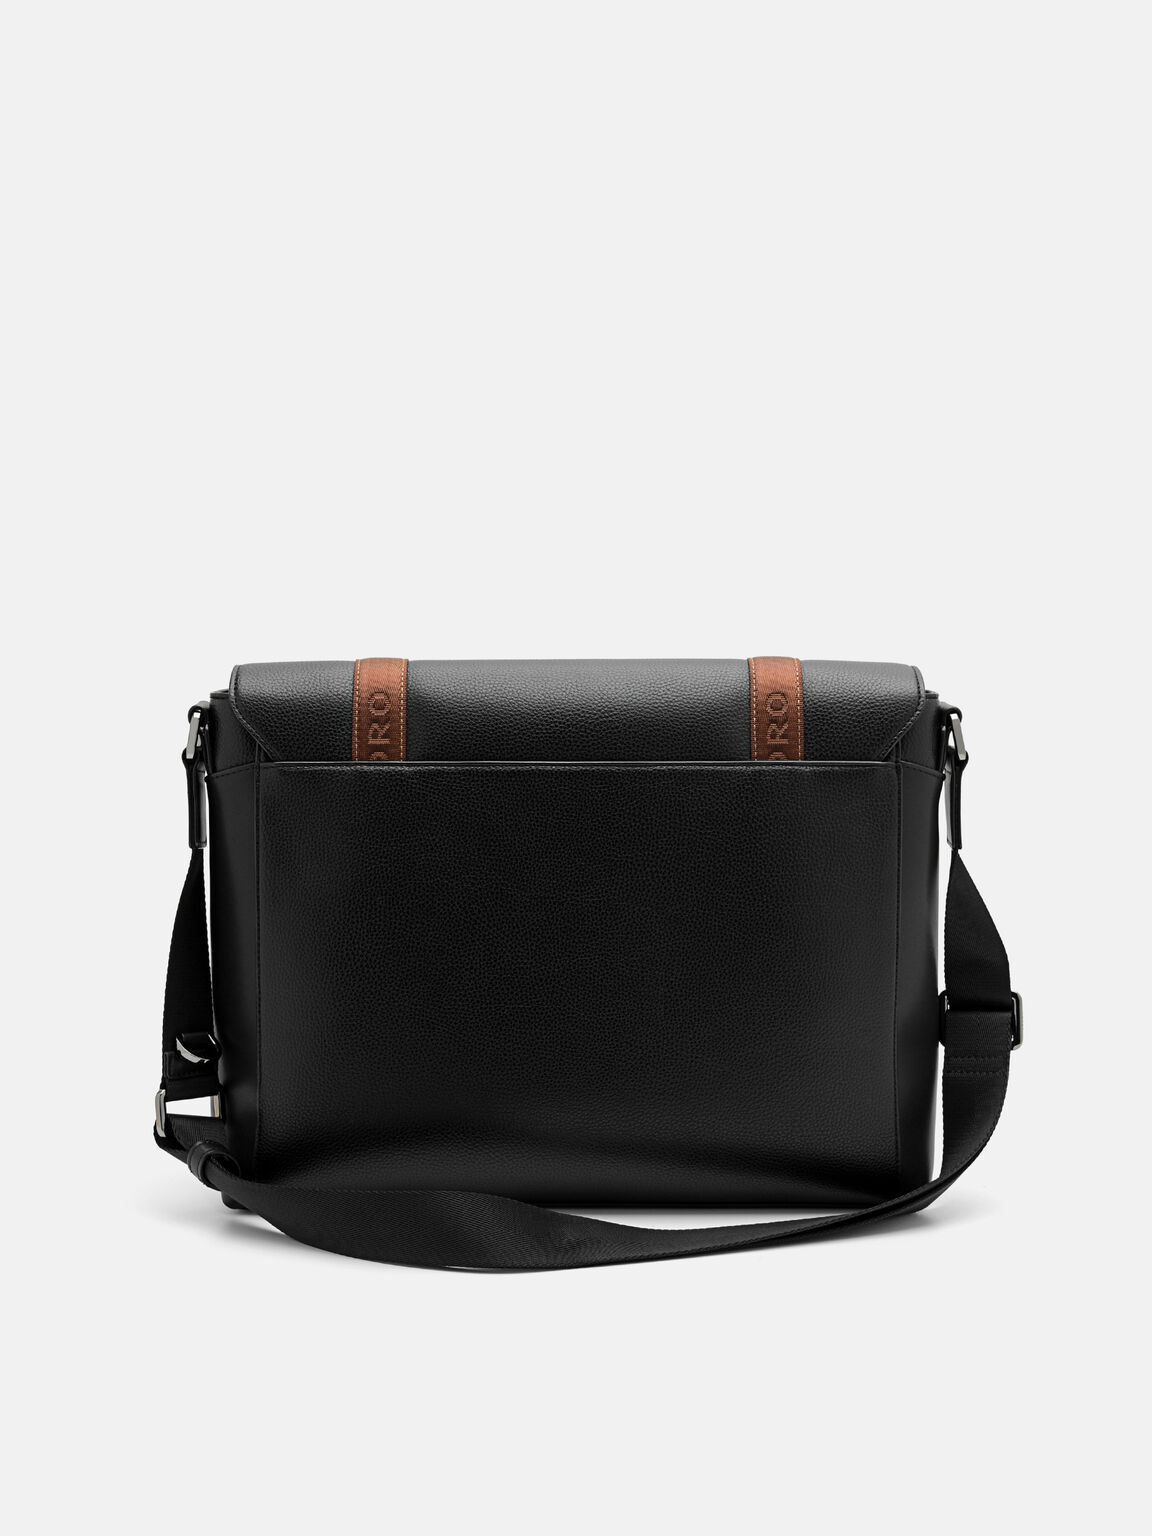 Rigby Messenger Bag, Black